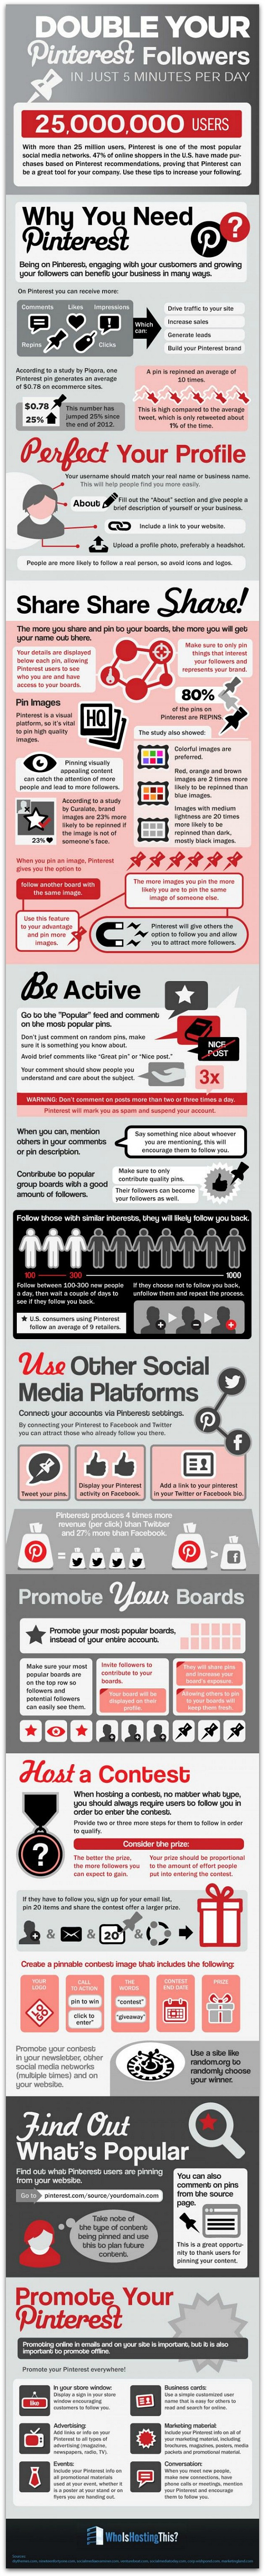 Get_More_Pinterest_Followers_Infographic